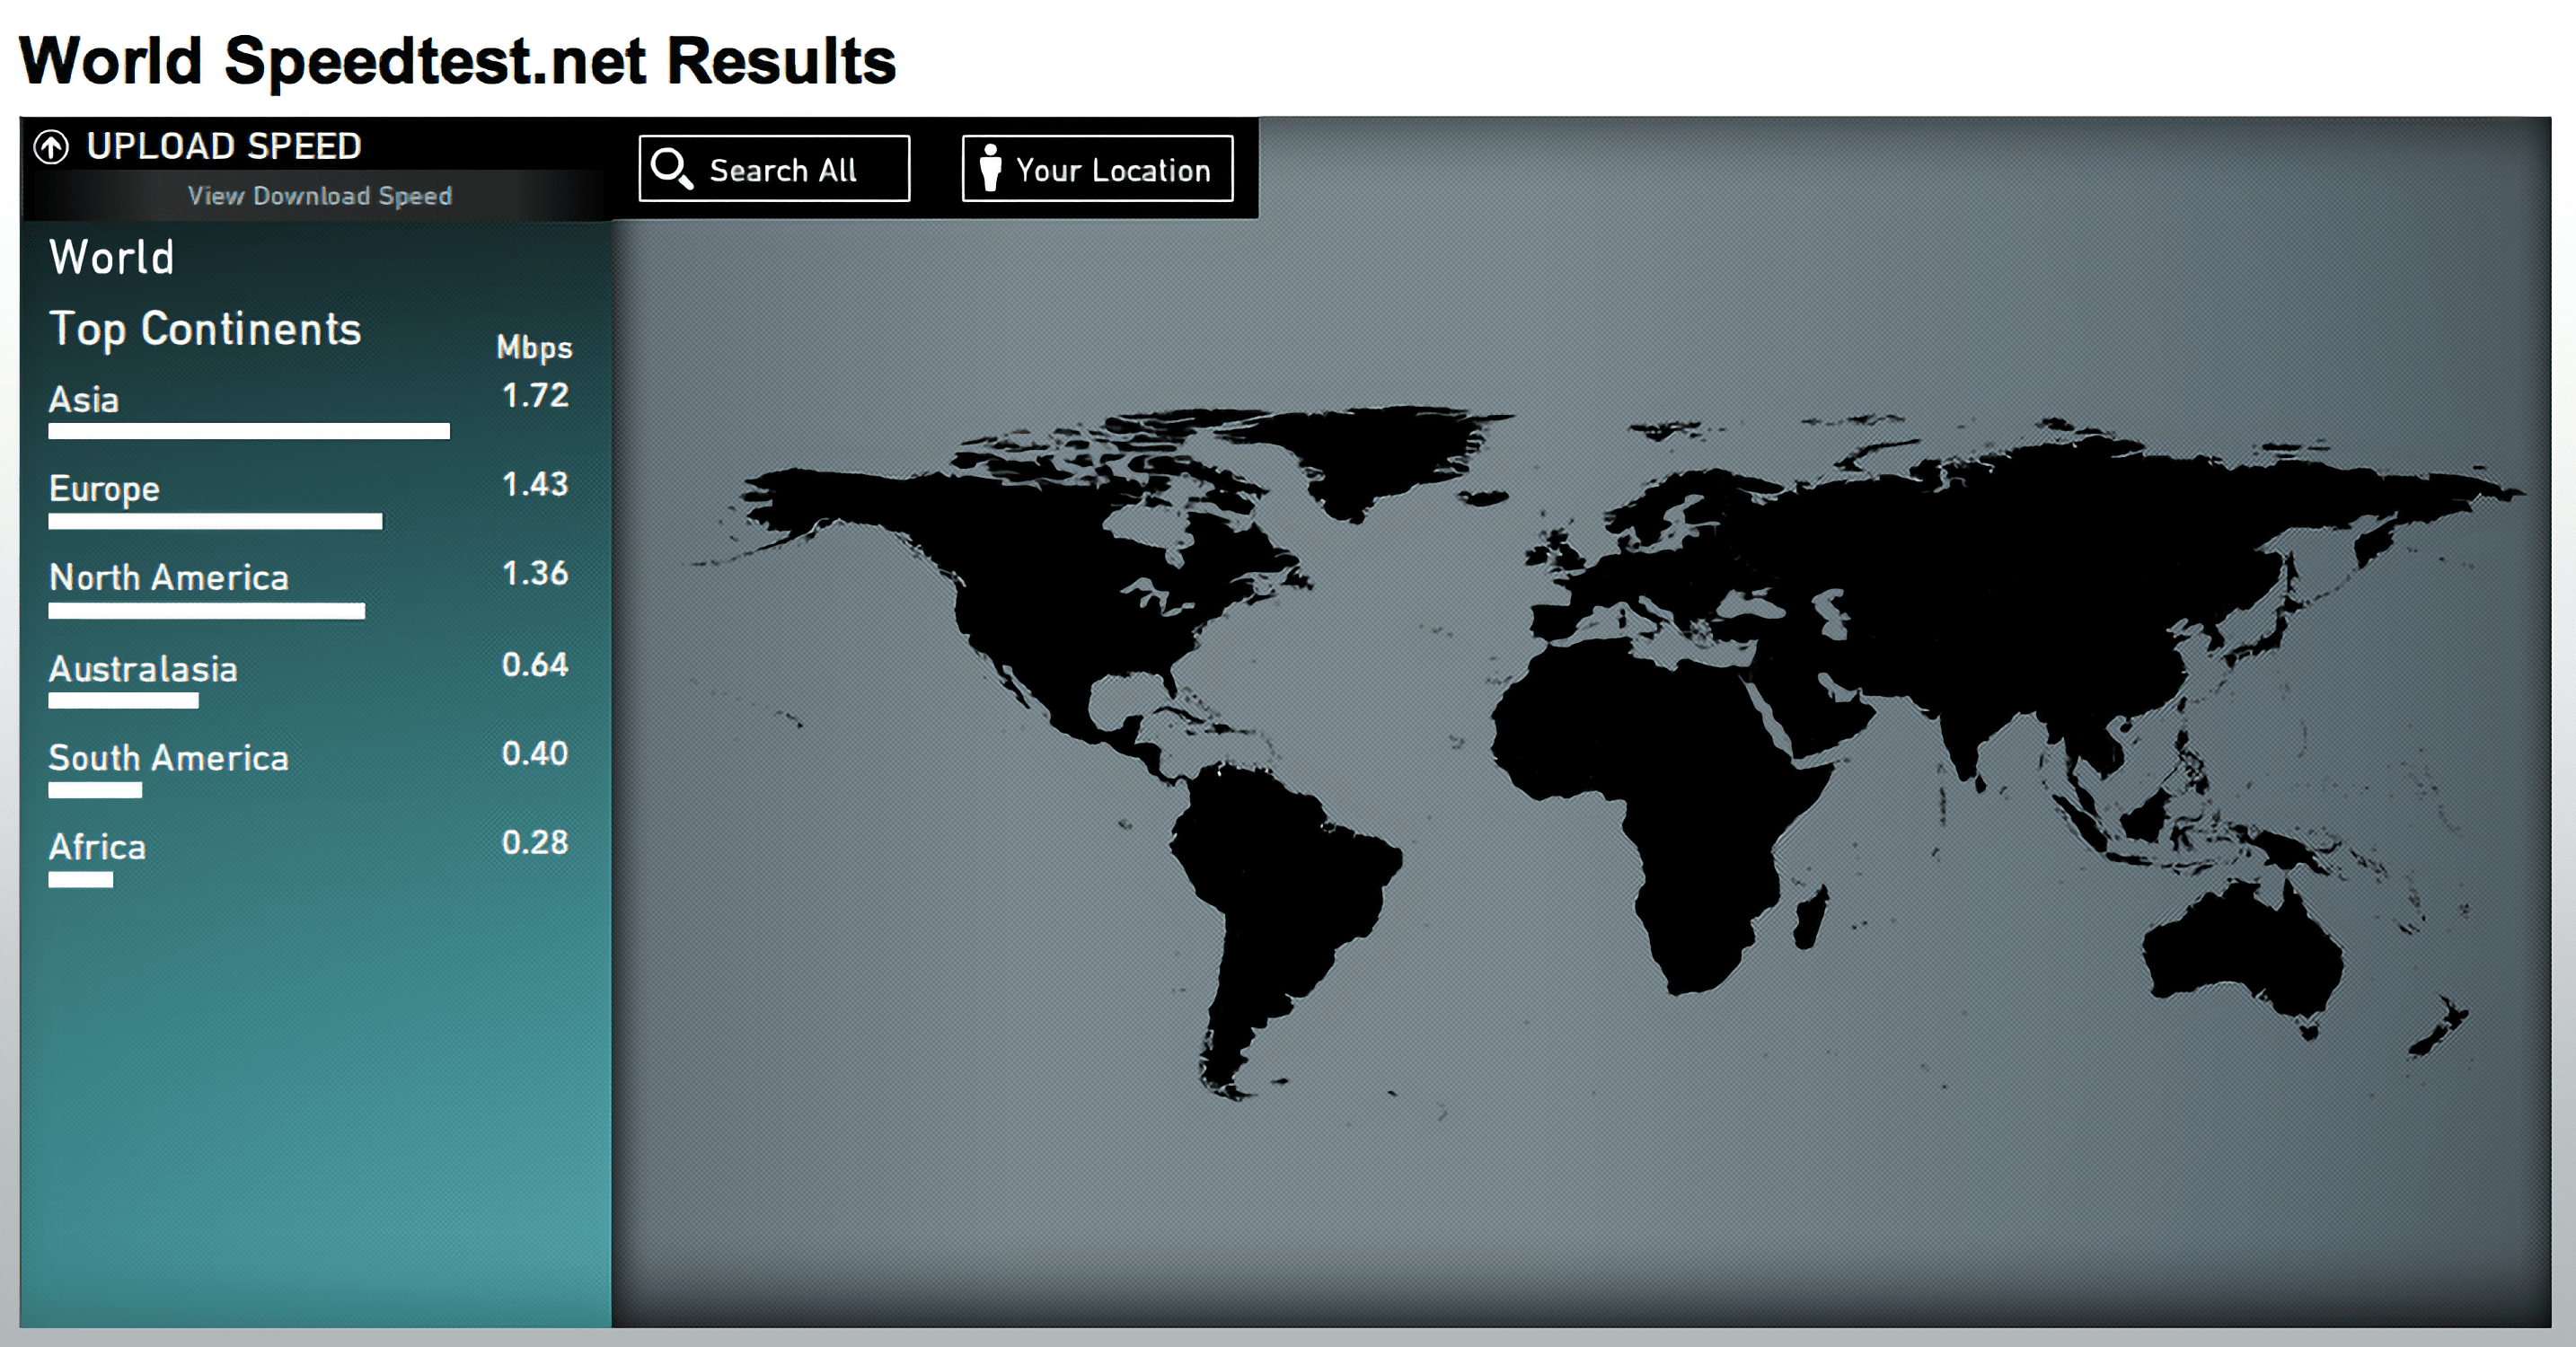 Speedtest.net&rsquo;s summary of worldwide test results. Source.